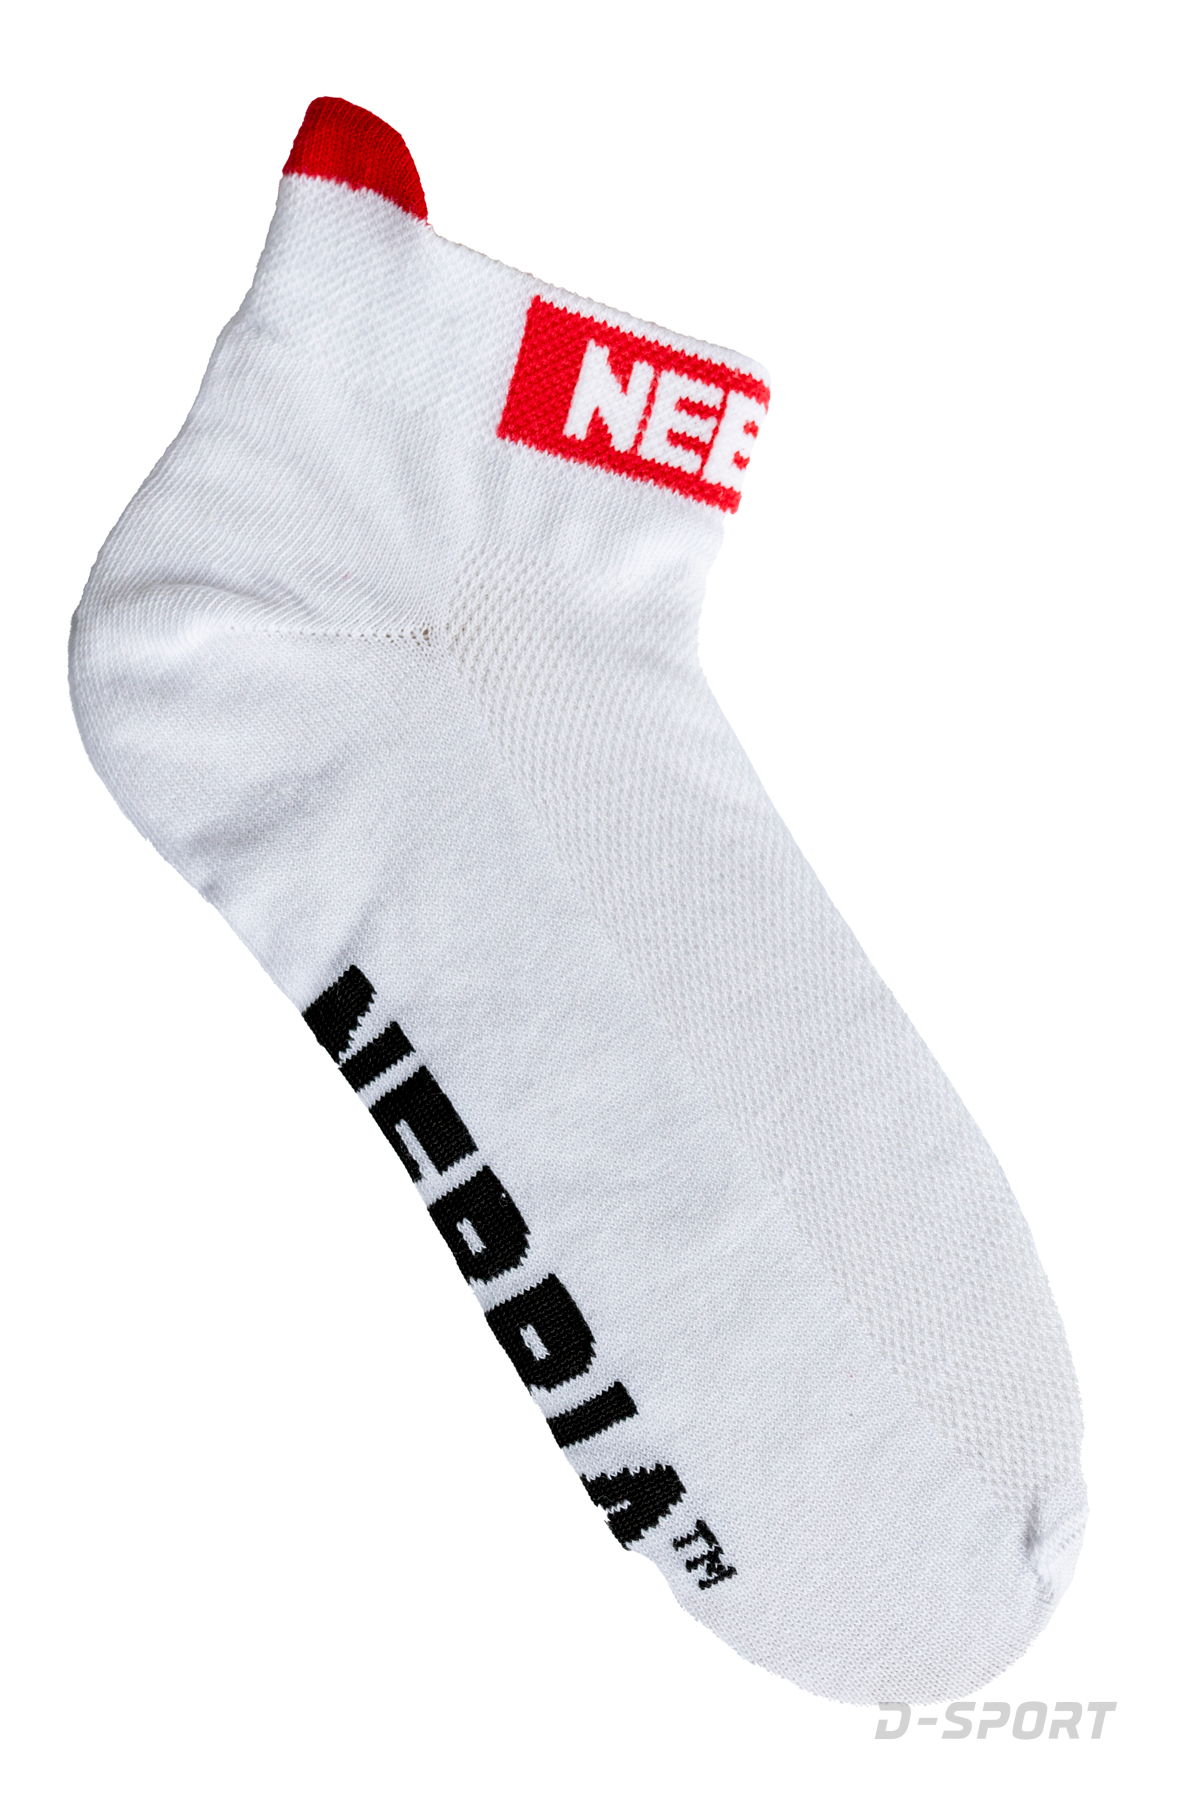 NEBBIA “SMASH IT” ankle length socks